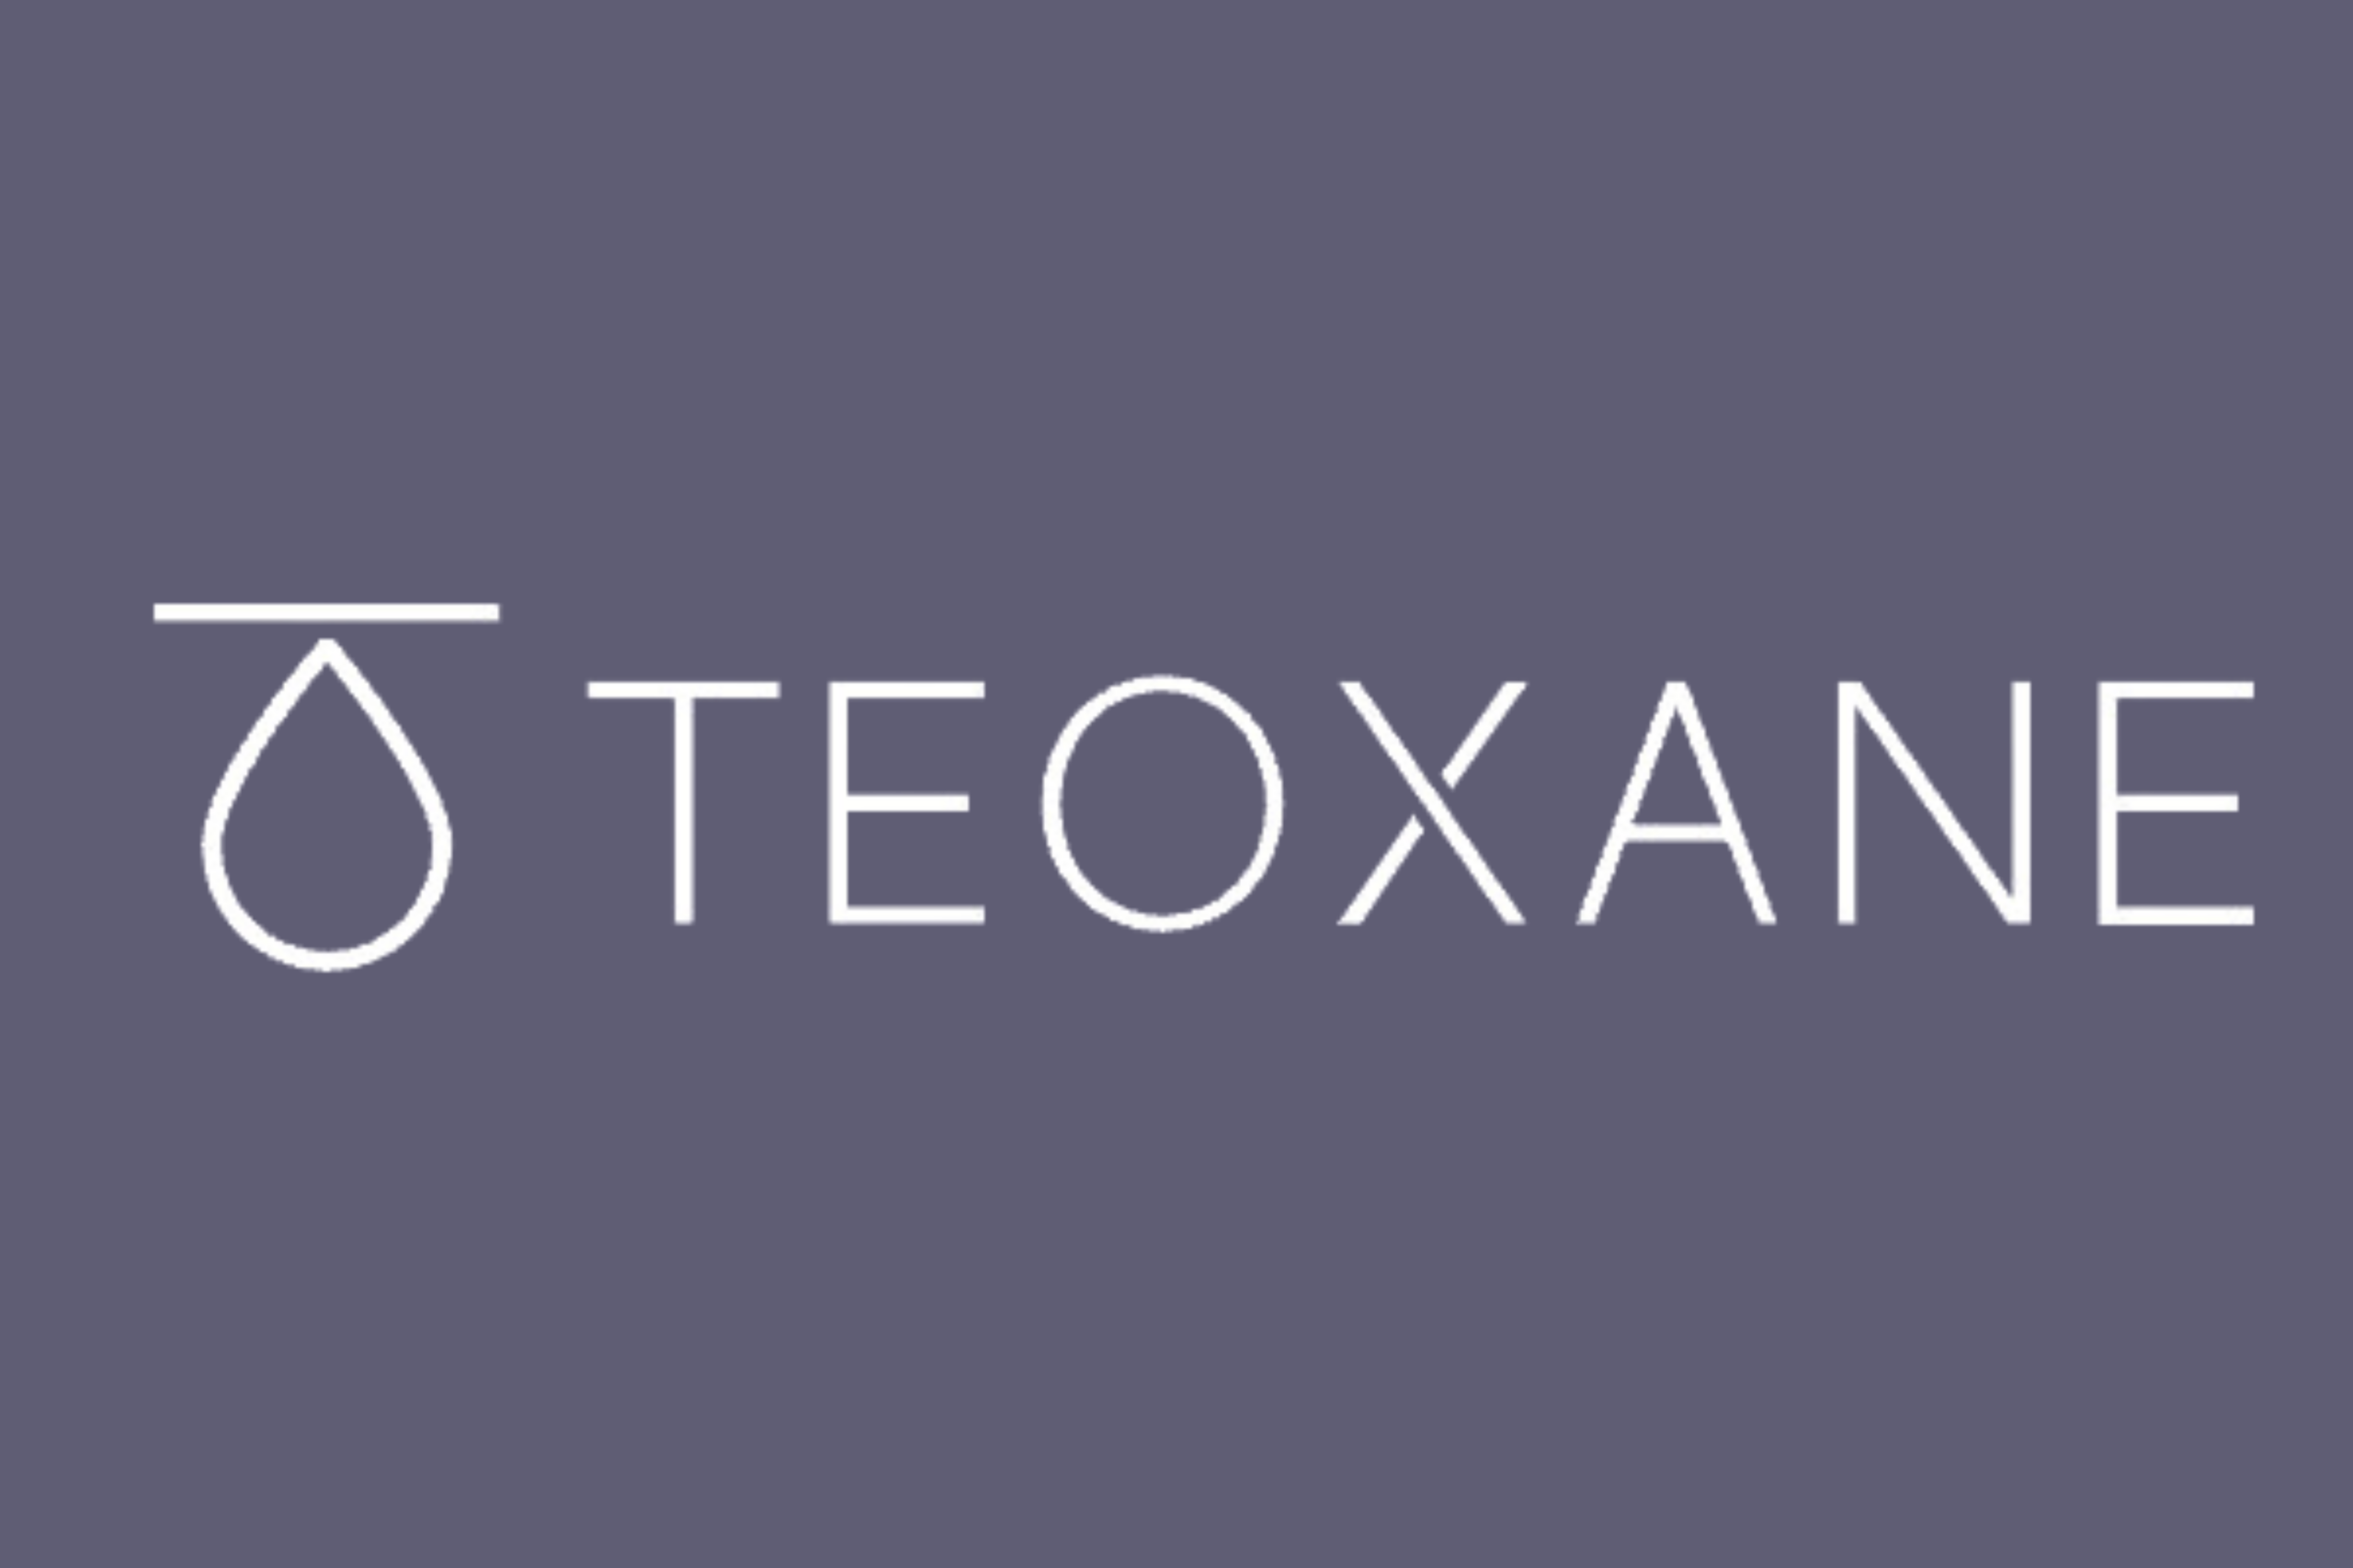 teoxane - dermal filler - brands we use - bellucci aesthetics london clinic